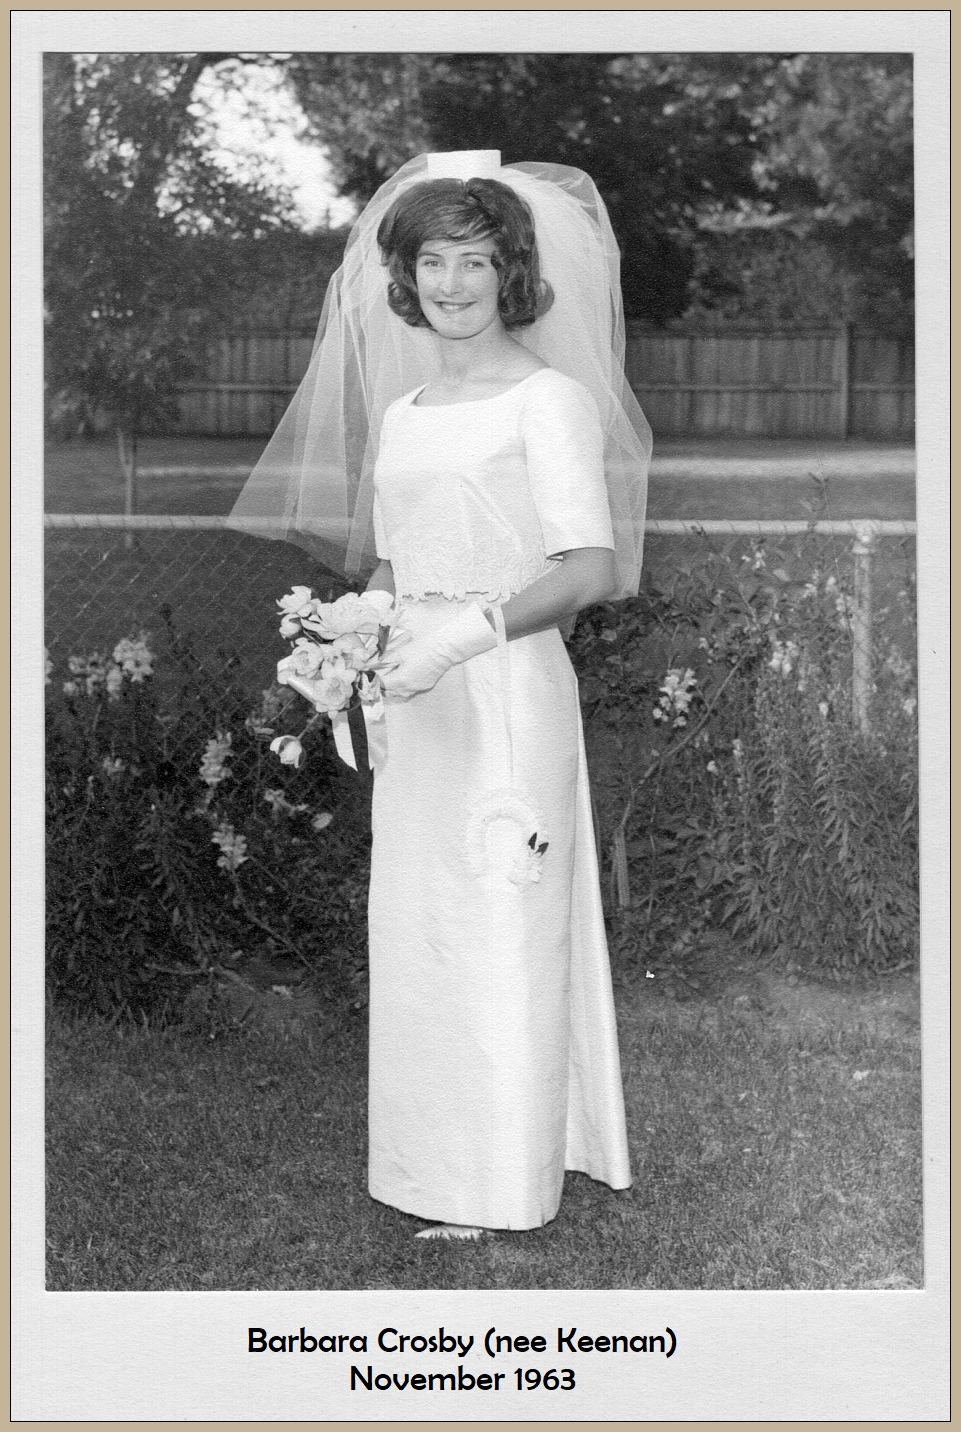 Barbara Keenan wedding day - by herself